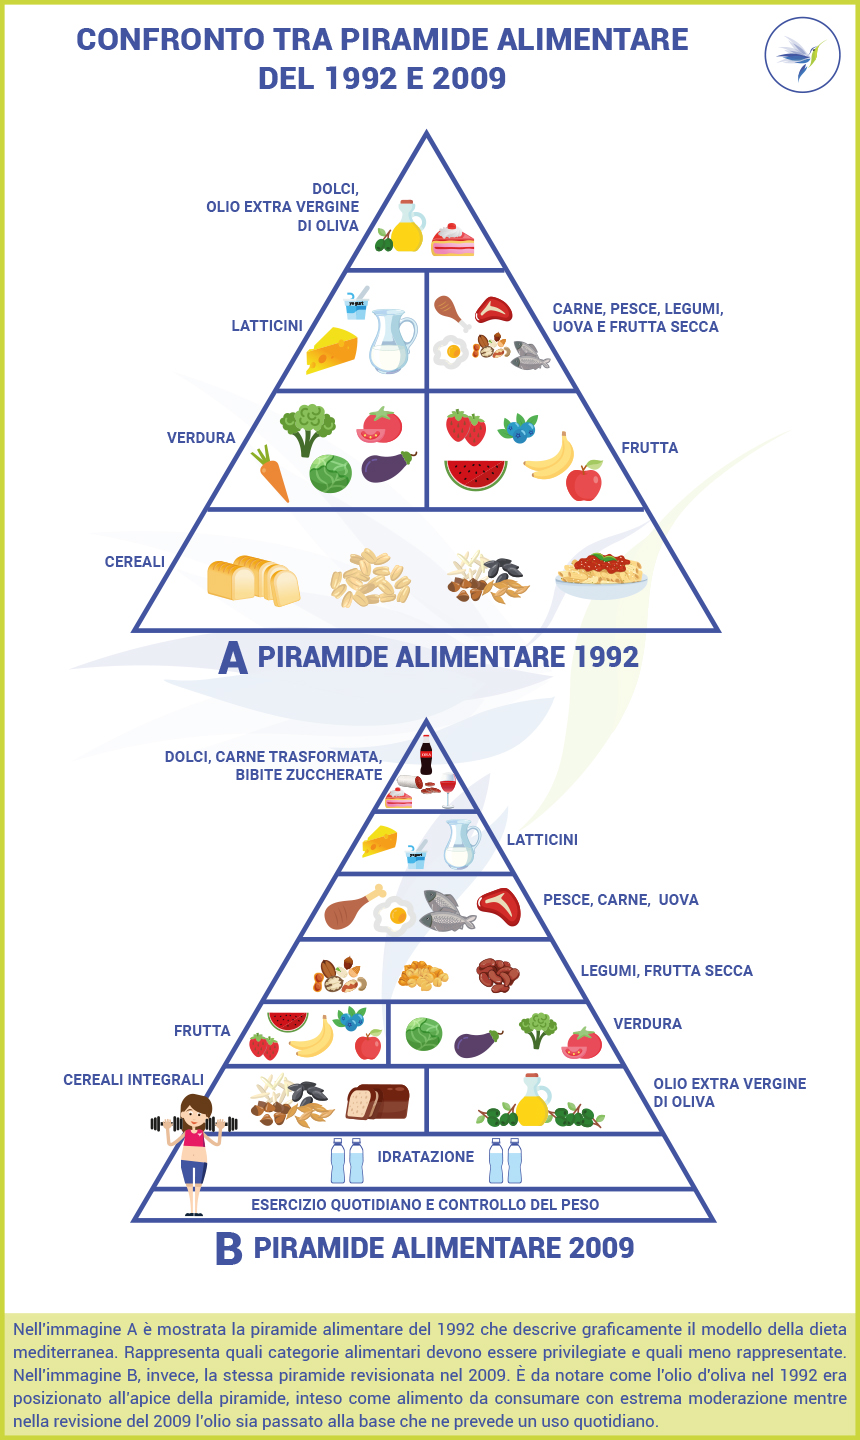 Piramide alimentare 1992 VS Nuova piramide alimentare 2009 1